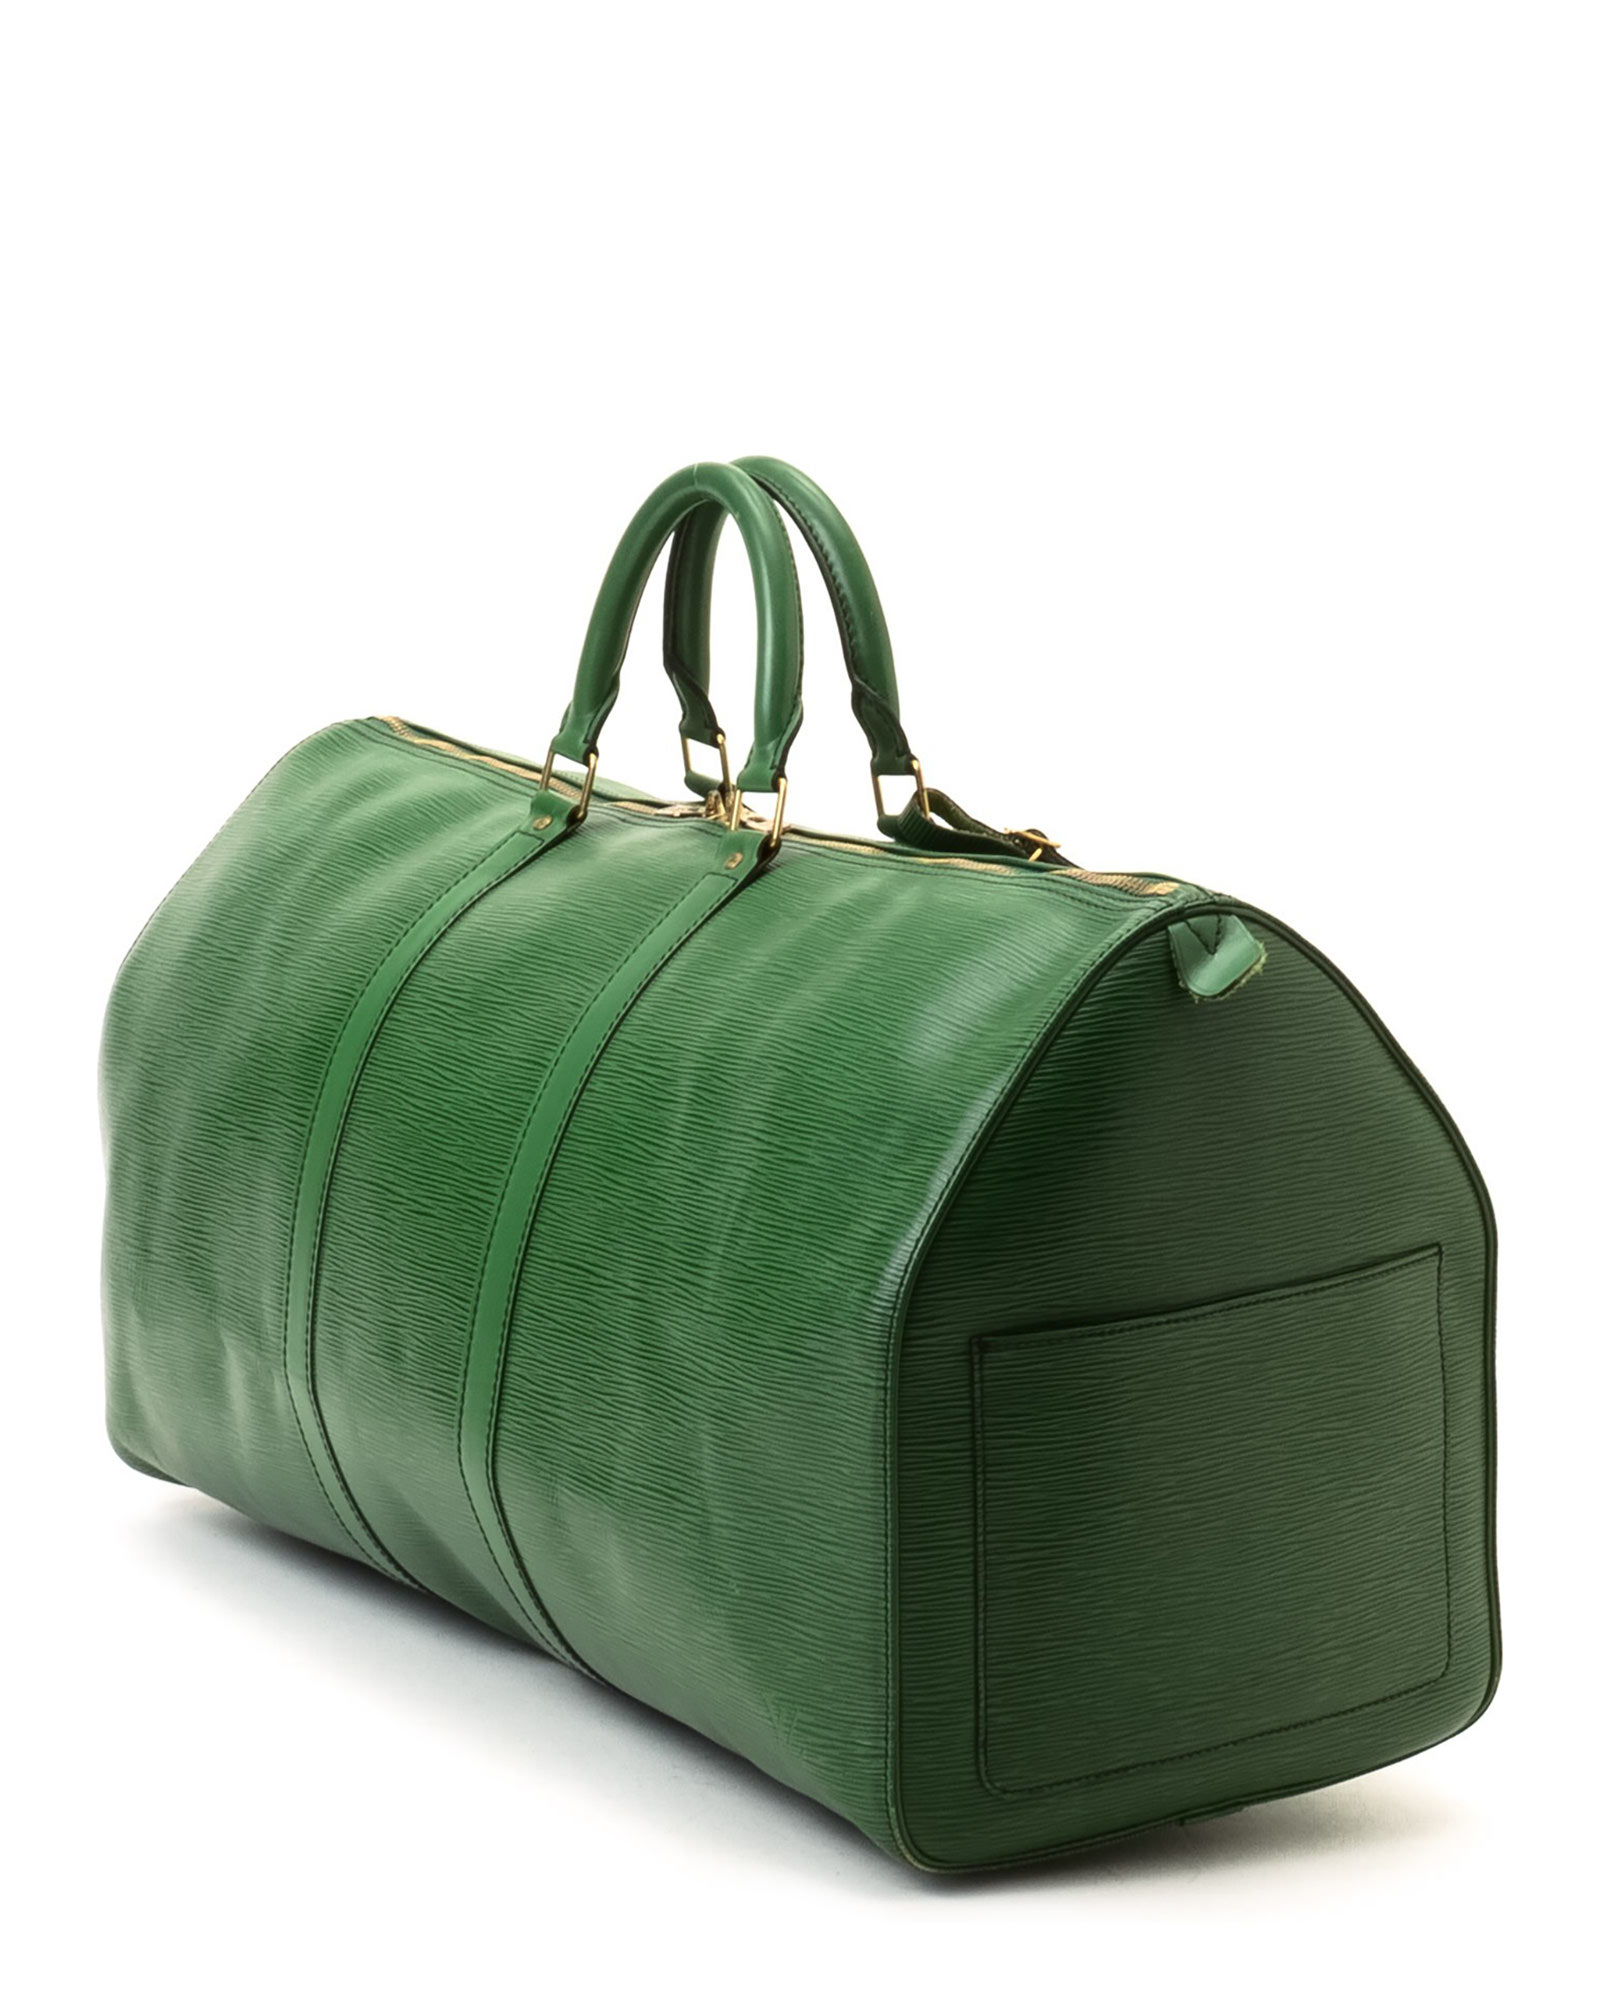 Lyst - Louis Vuitton Green Travel Bag - Vintage in Green